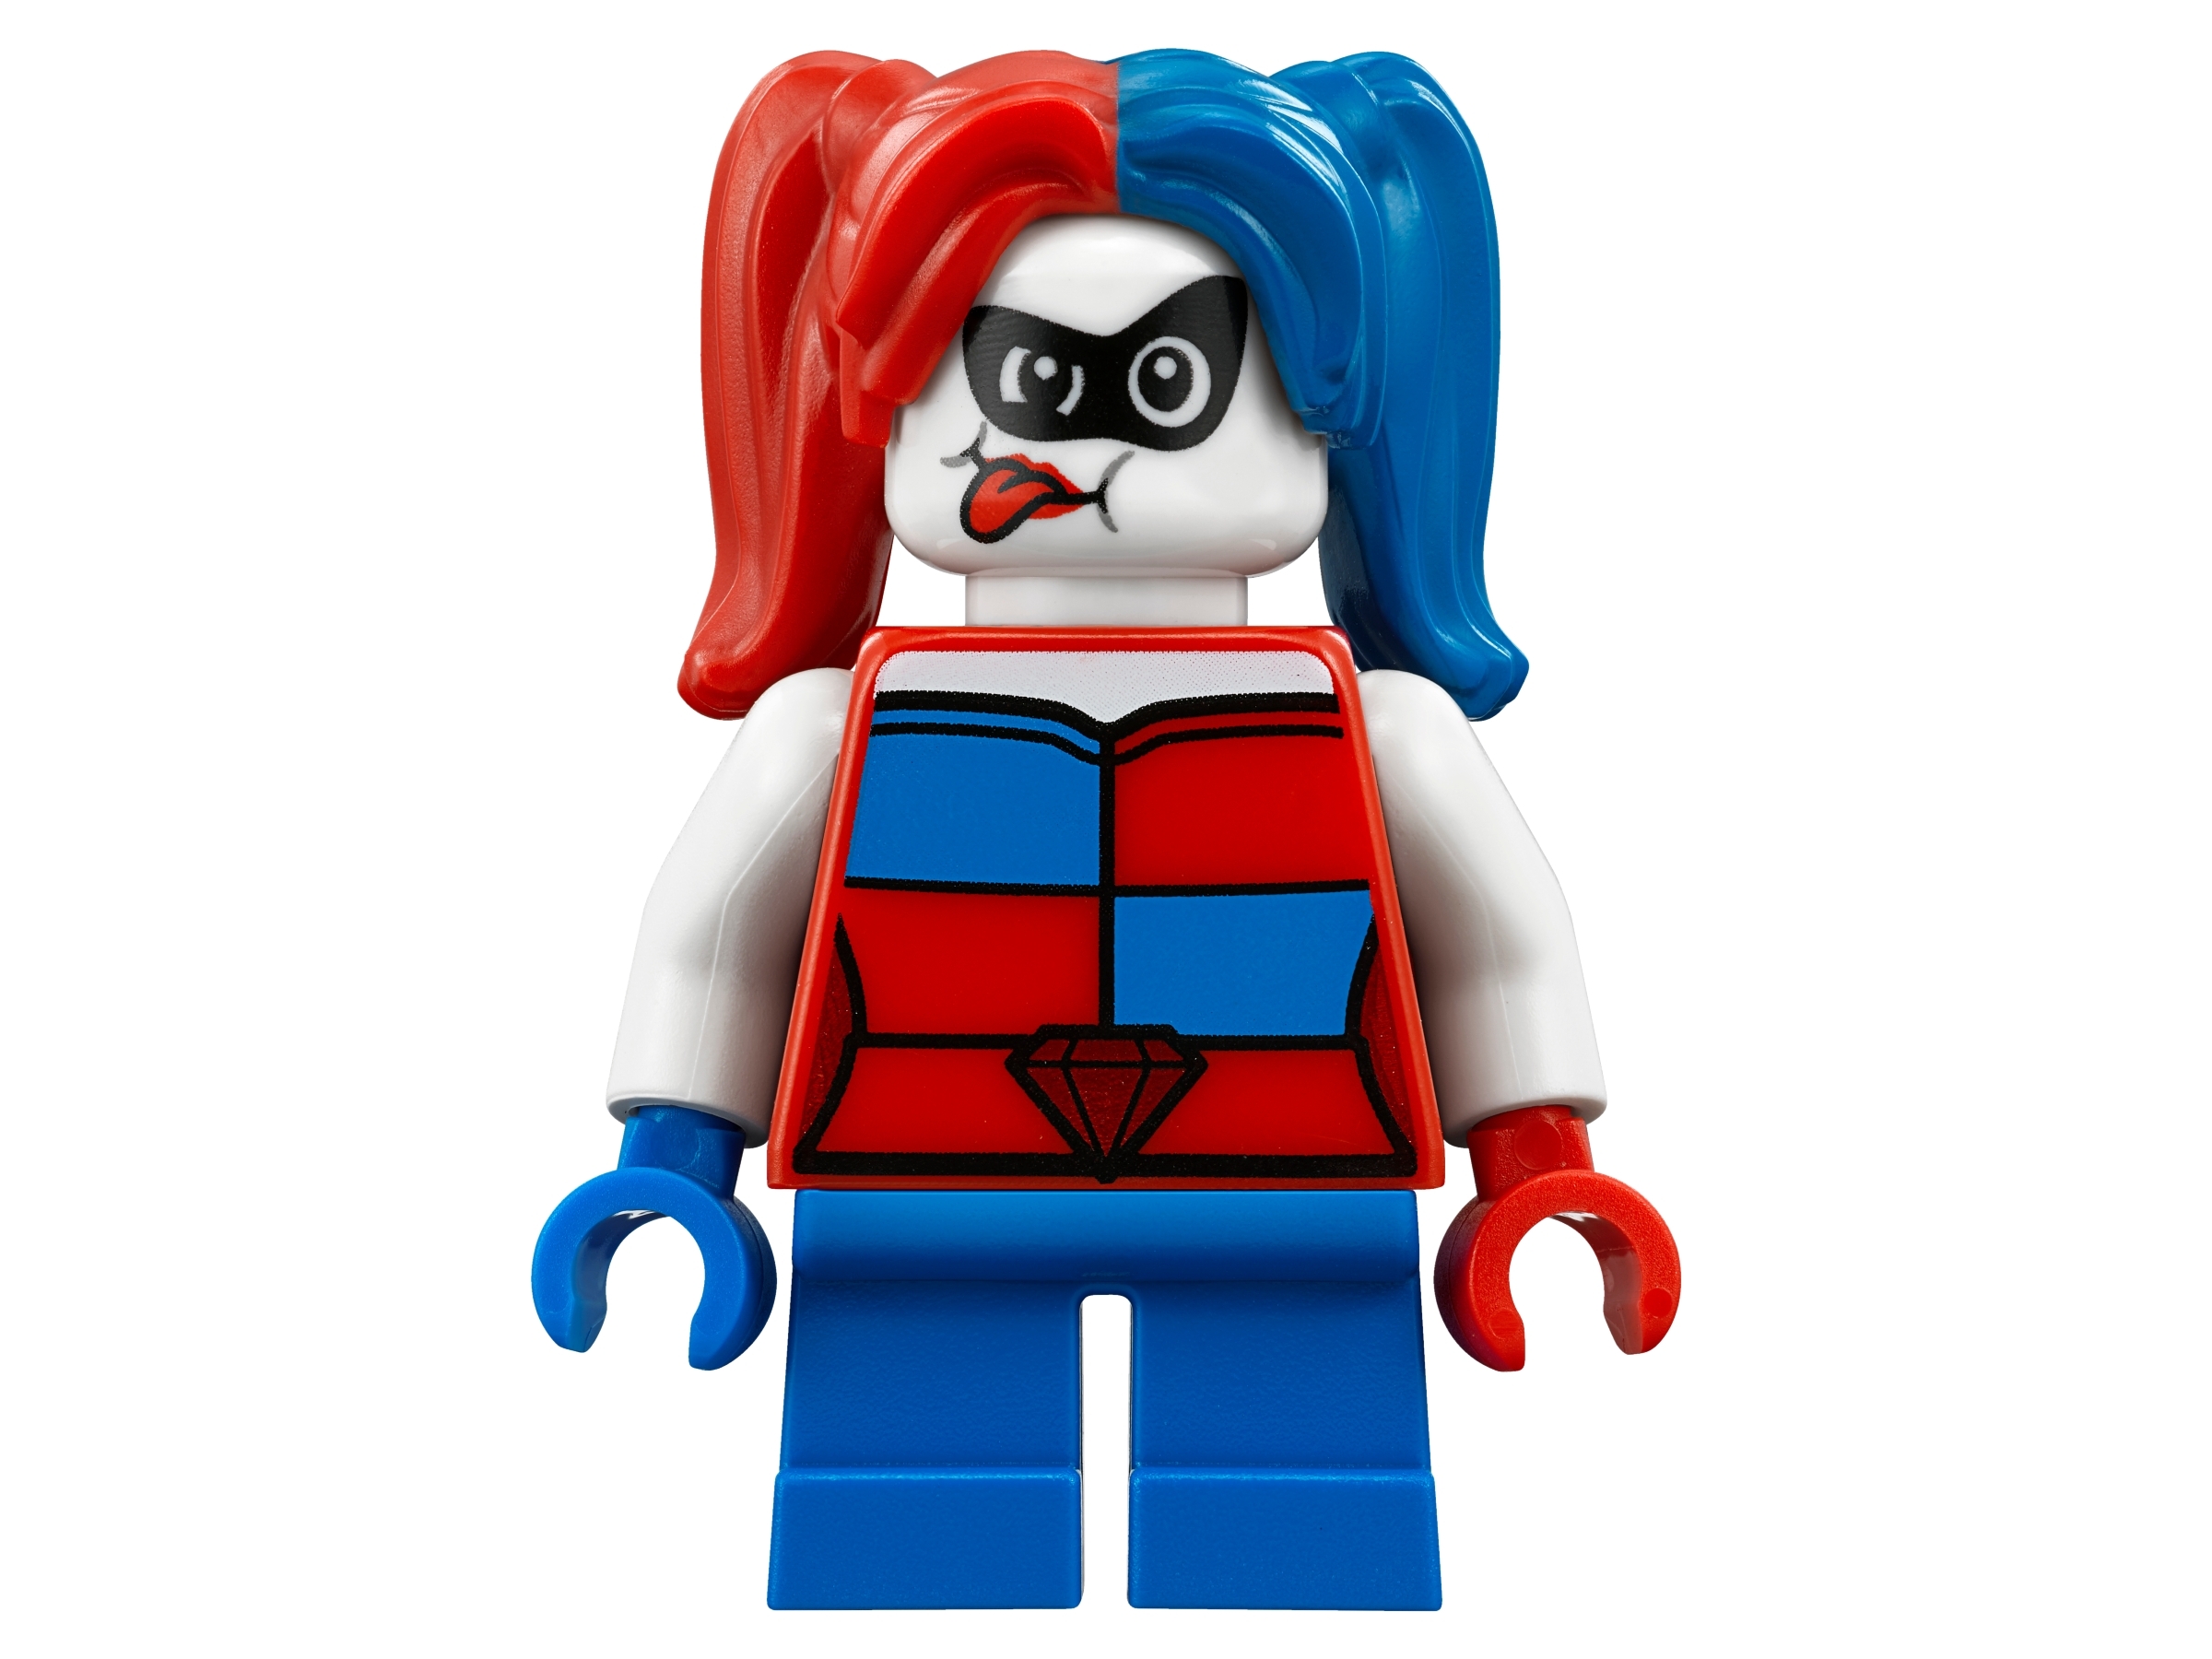 Lego 76092 DC Super Heroes Batman vs Harley Quinn Microfighter